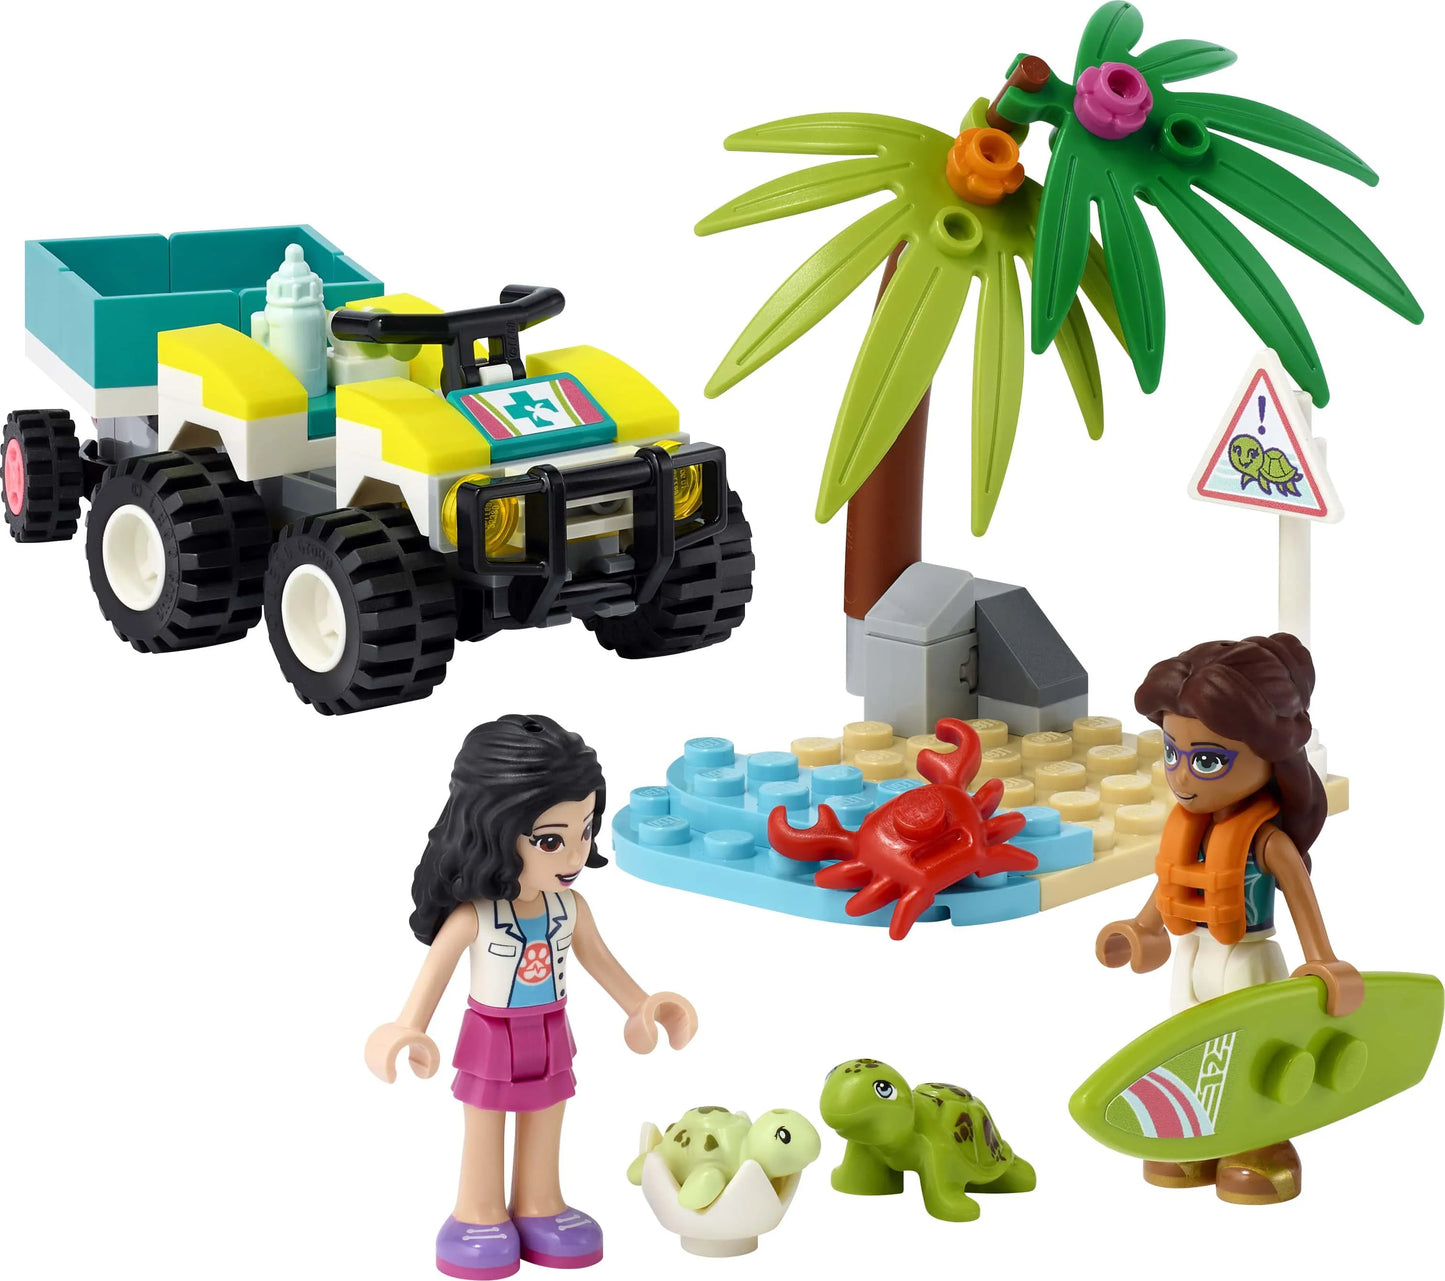 Turtle Rescue Vehicle - LEGO Friends